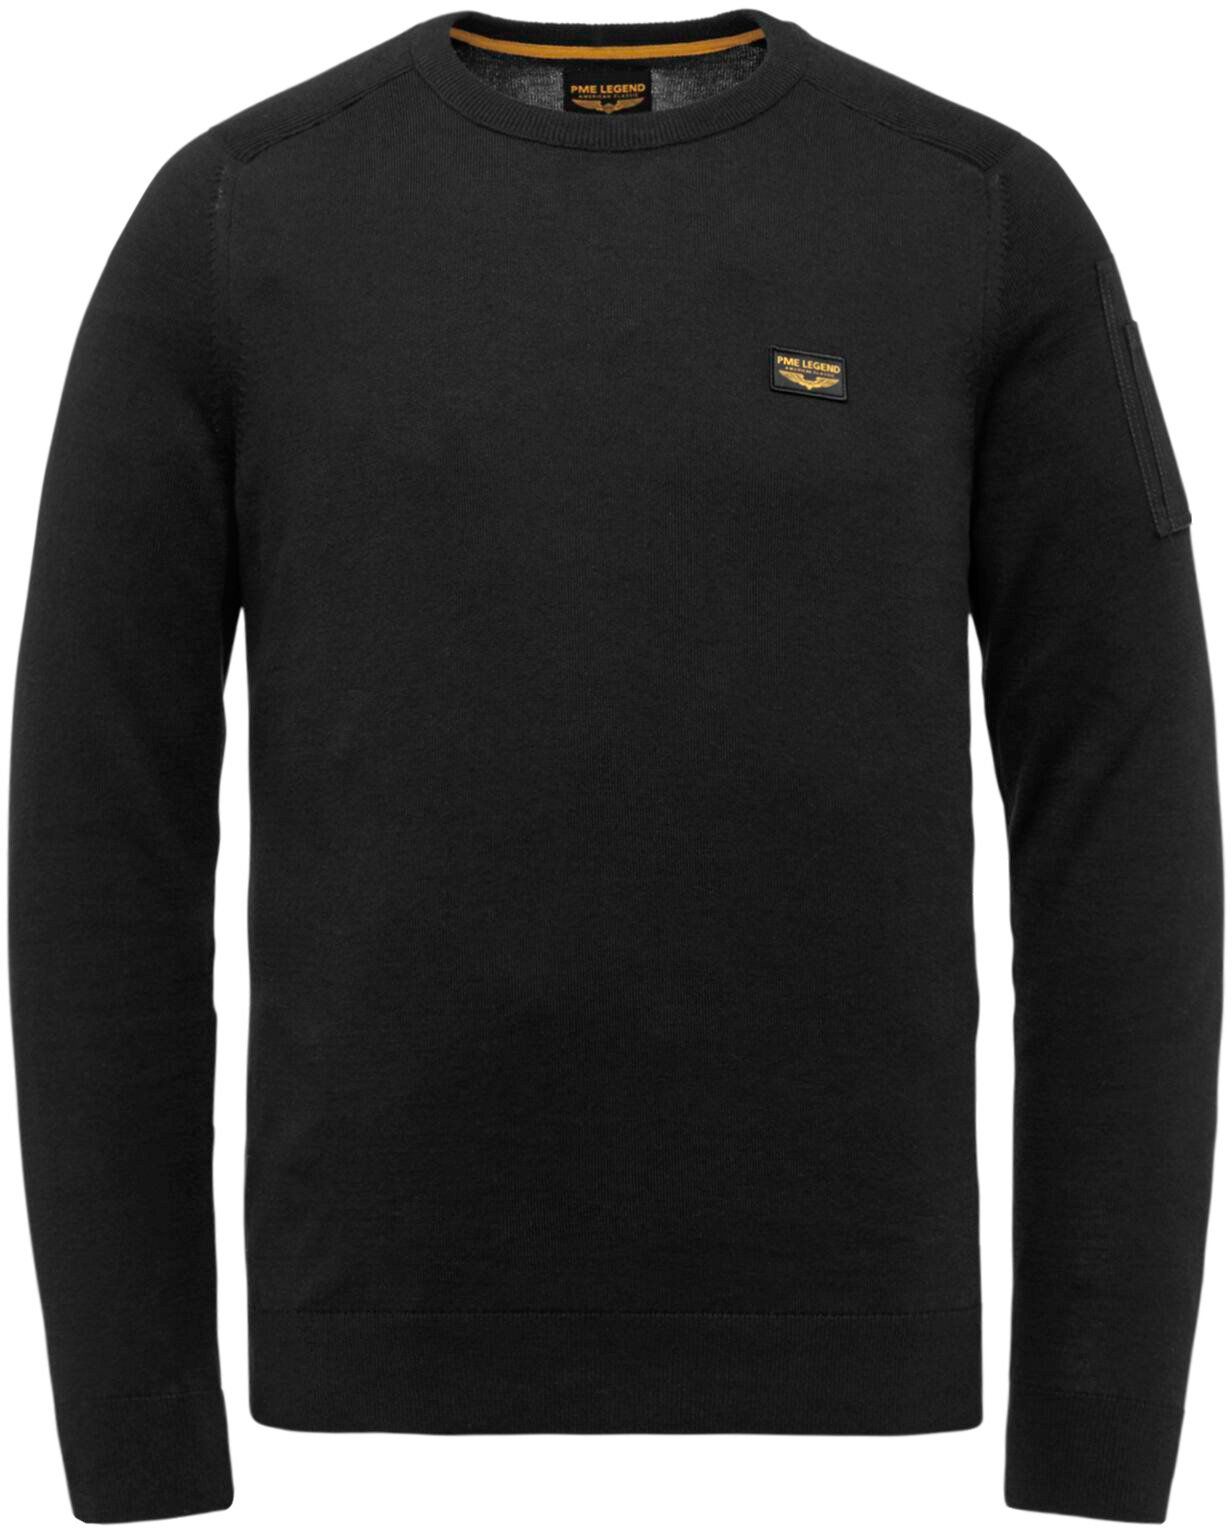 PME Legend Buckley Sweater Black size 3XL